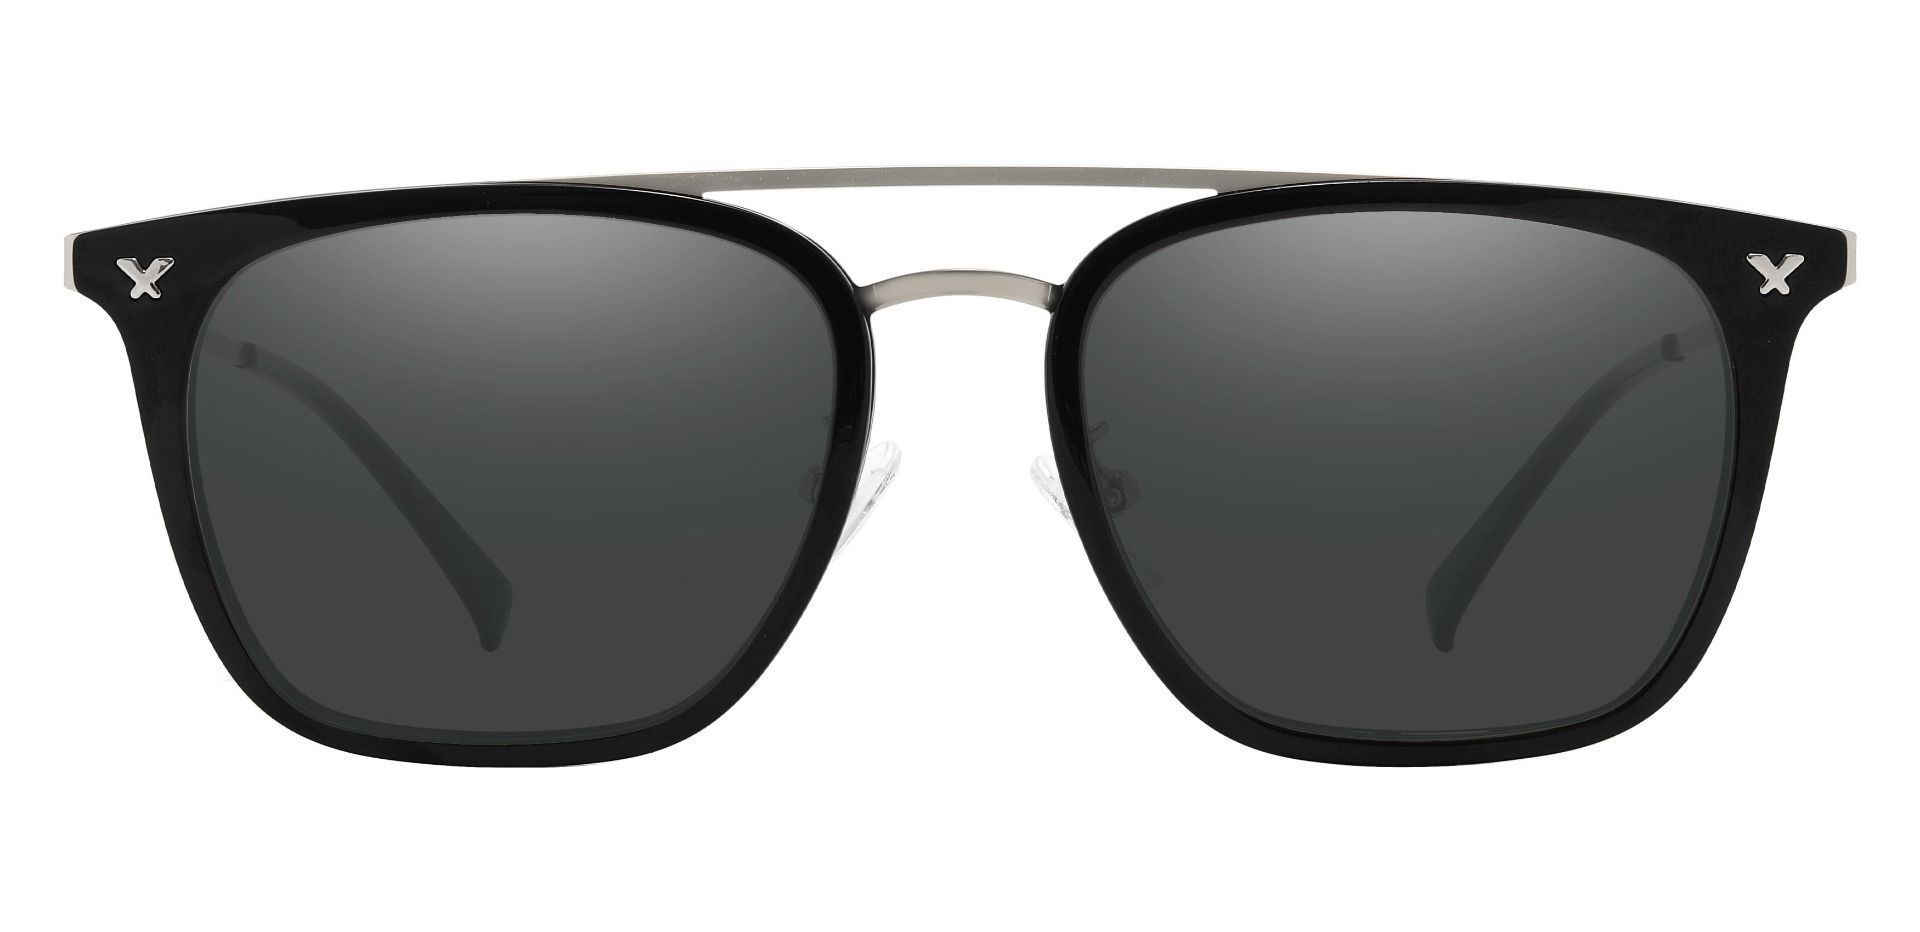 Francois Aviator Prescription Sunglasses - Black Frame With Gray Lenses